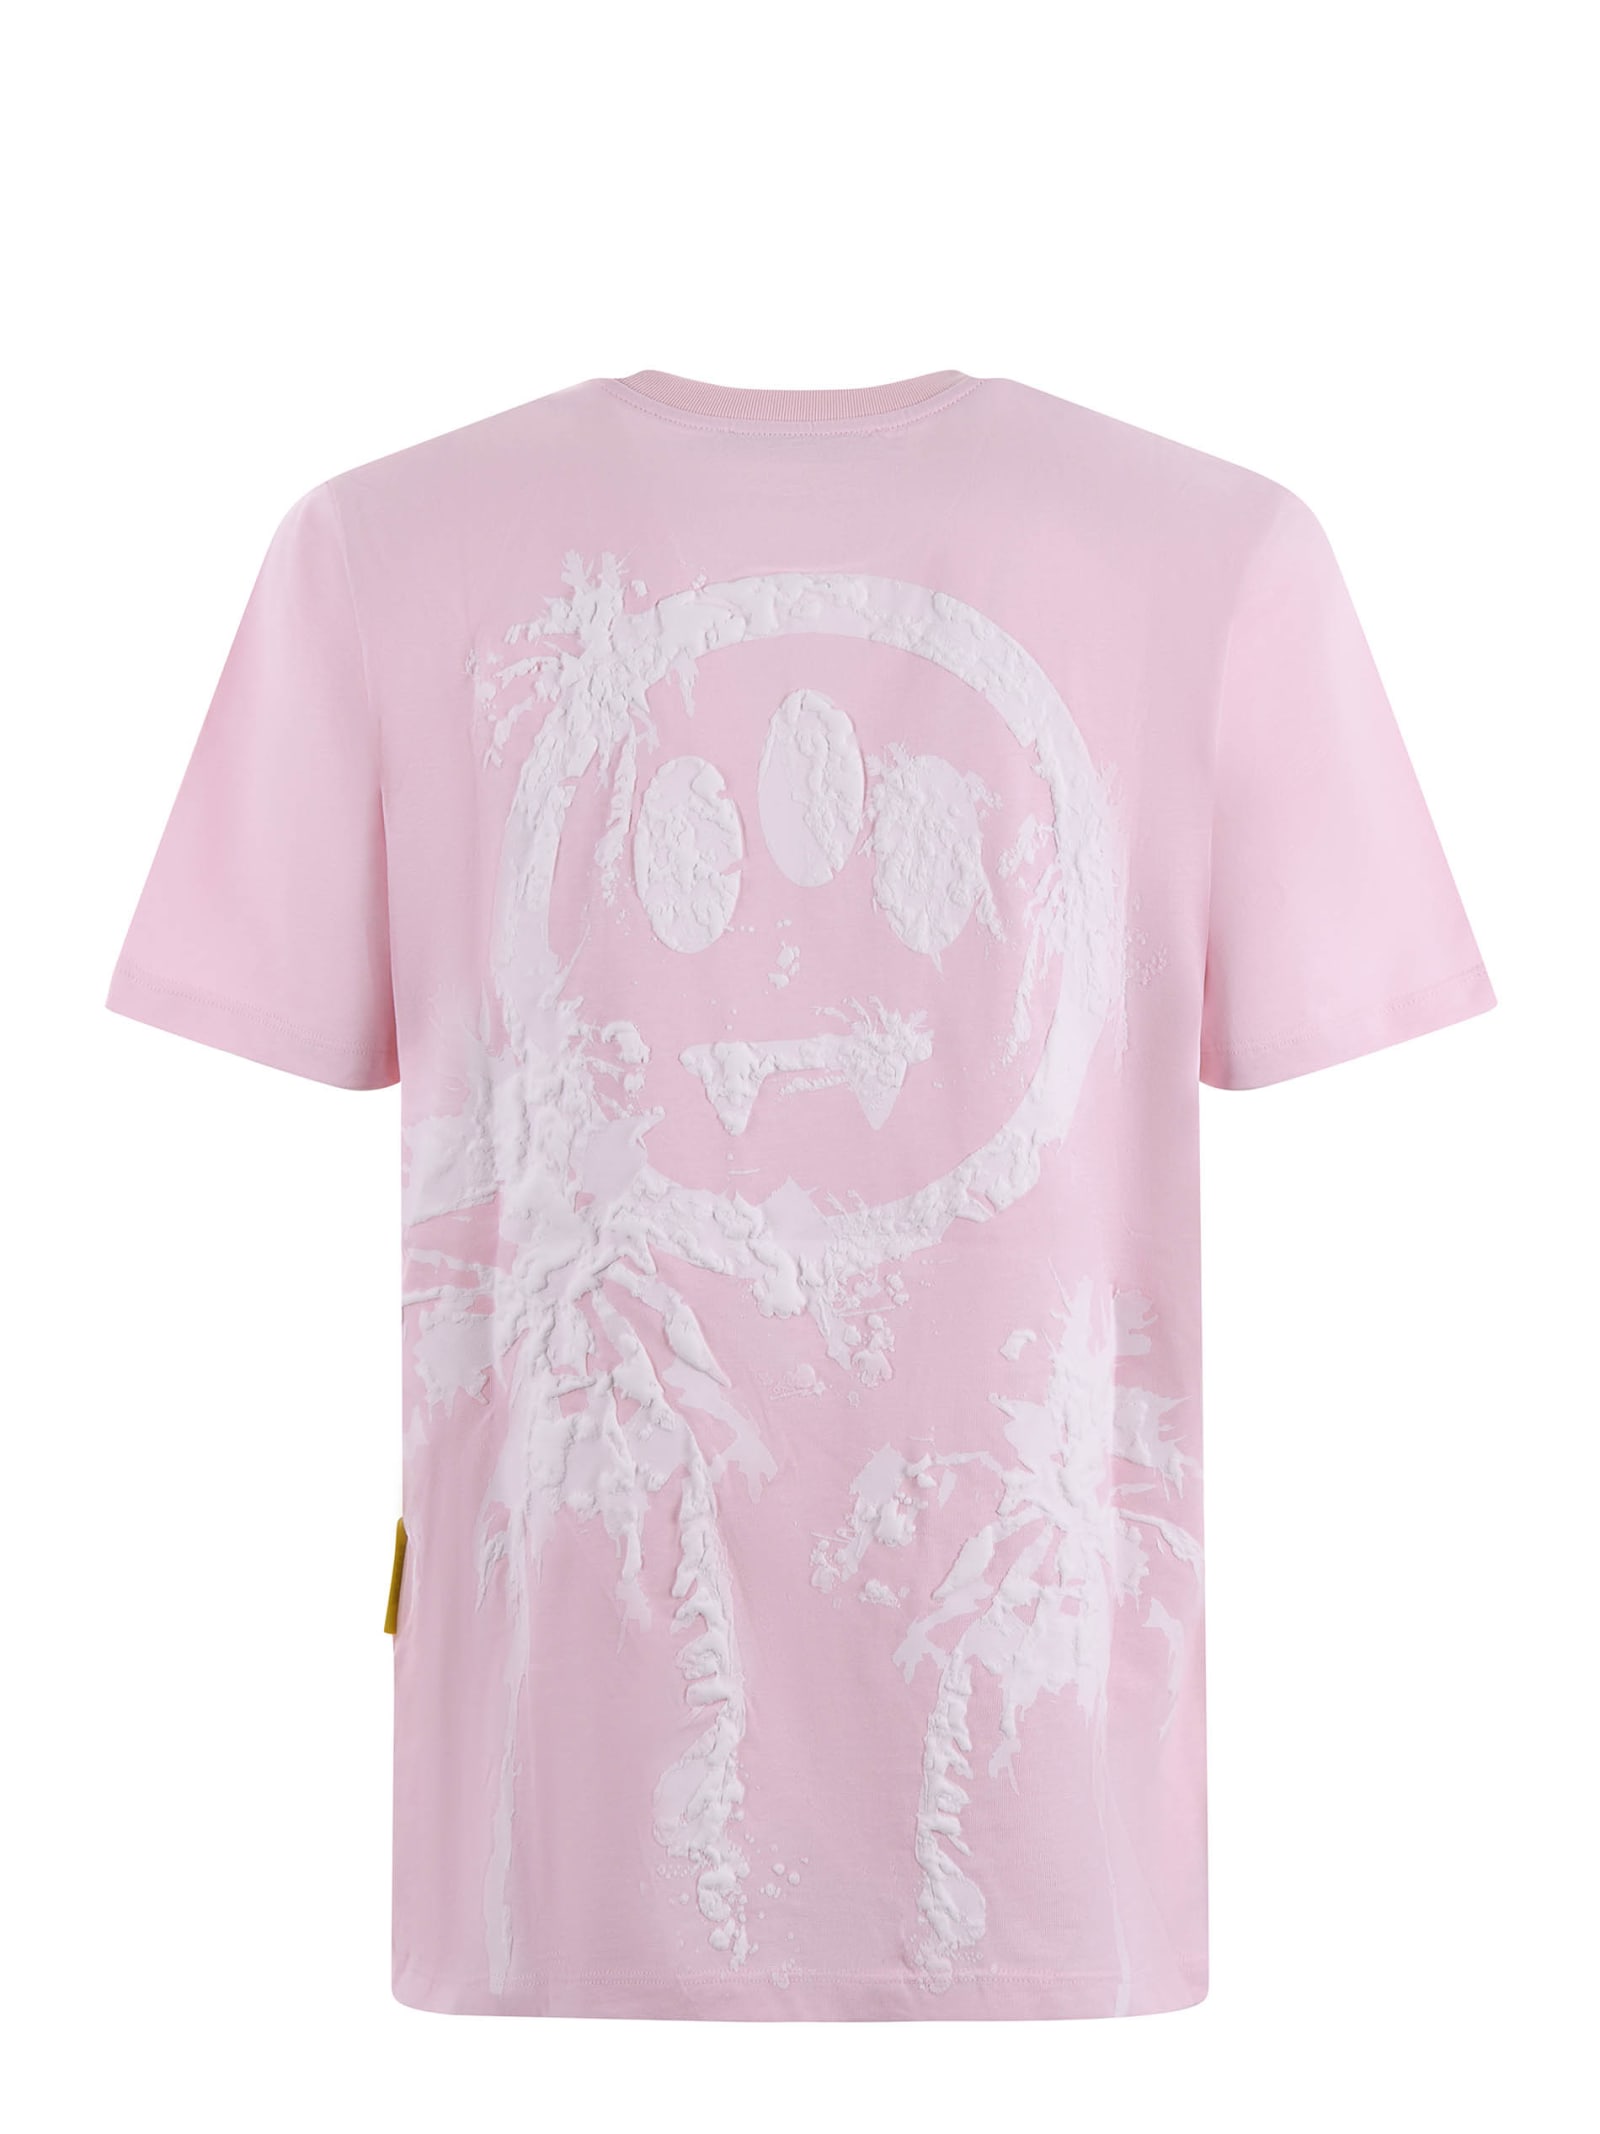 Shop Barrow Cotton T-shirt In Rosa